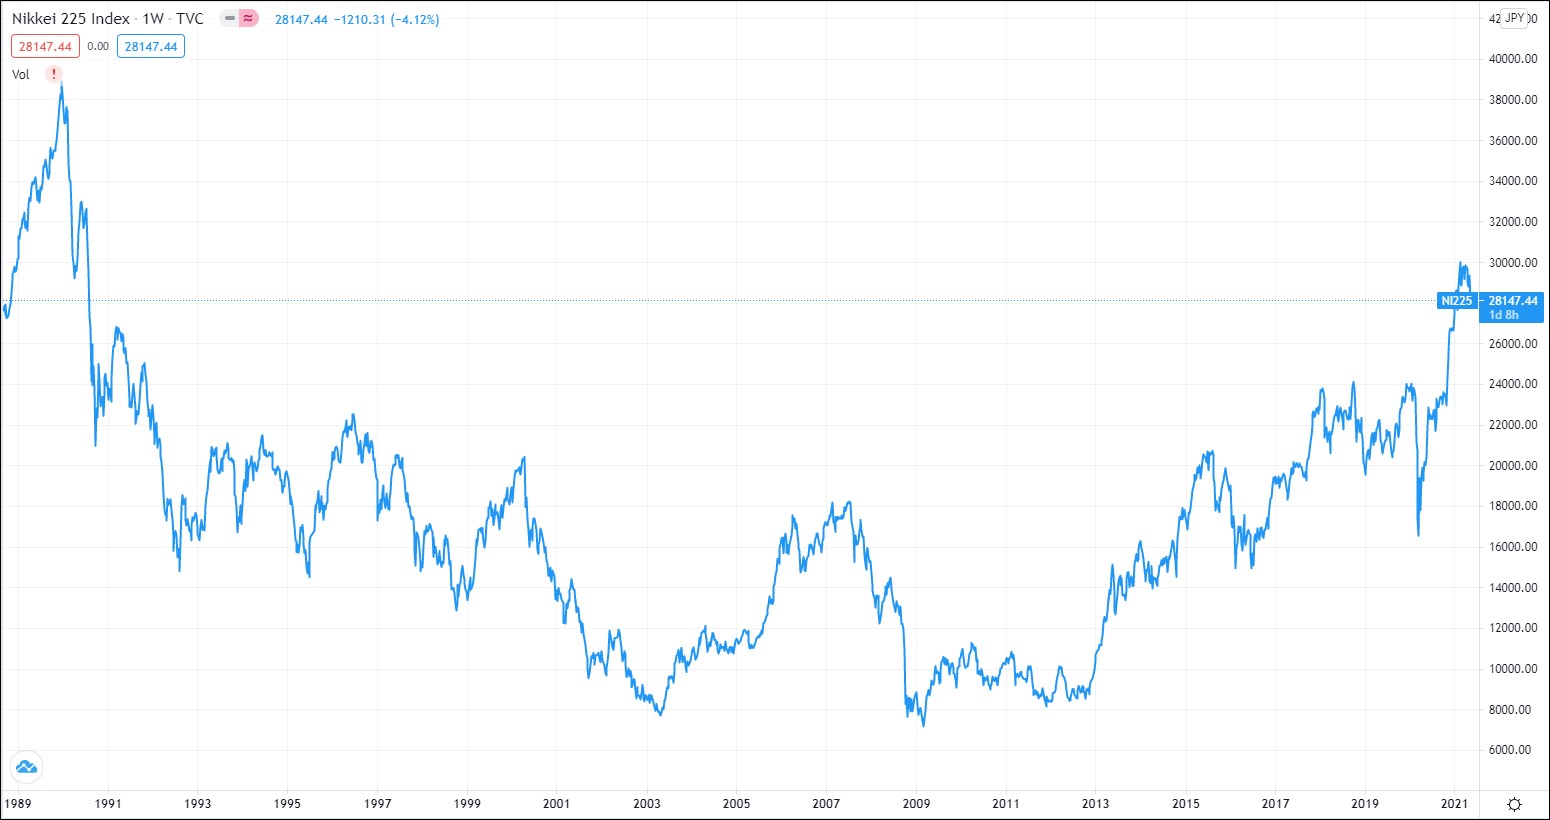 Gráfico do Nikkei desde 1989